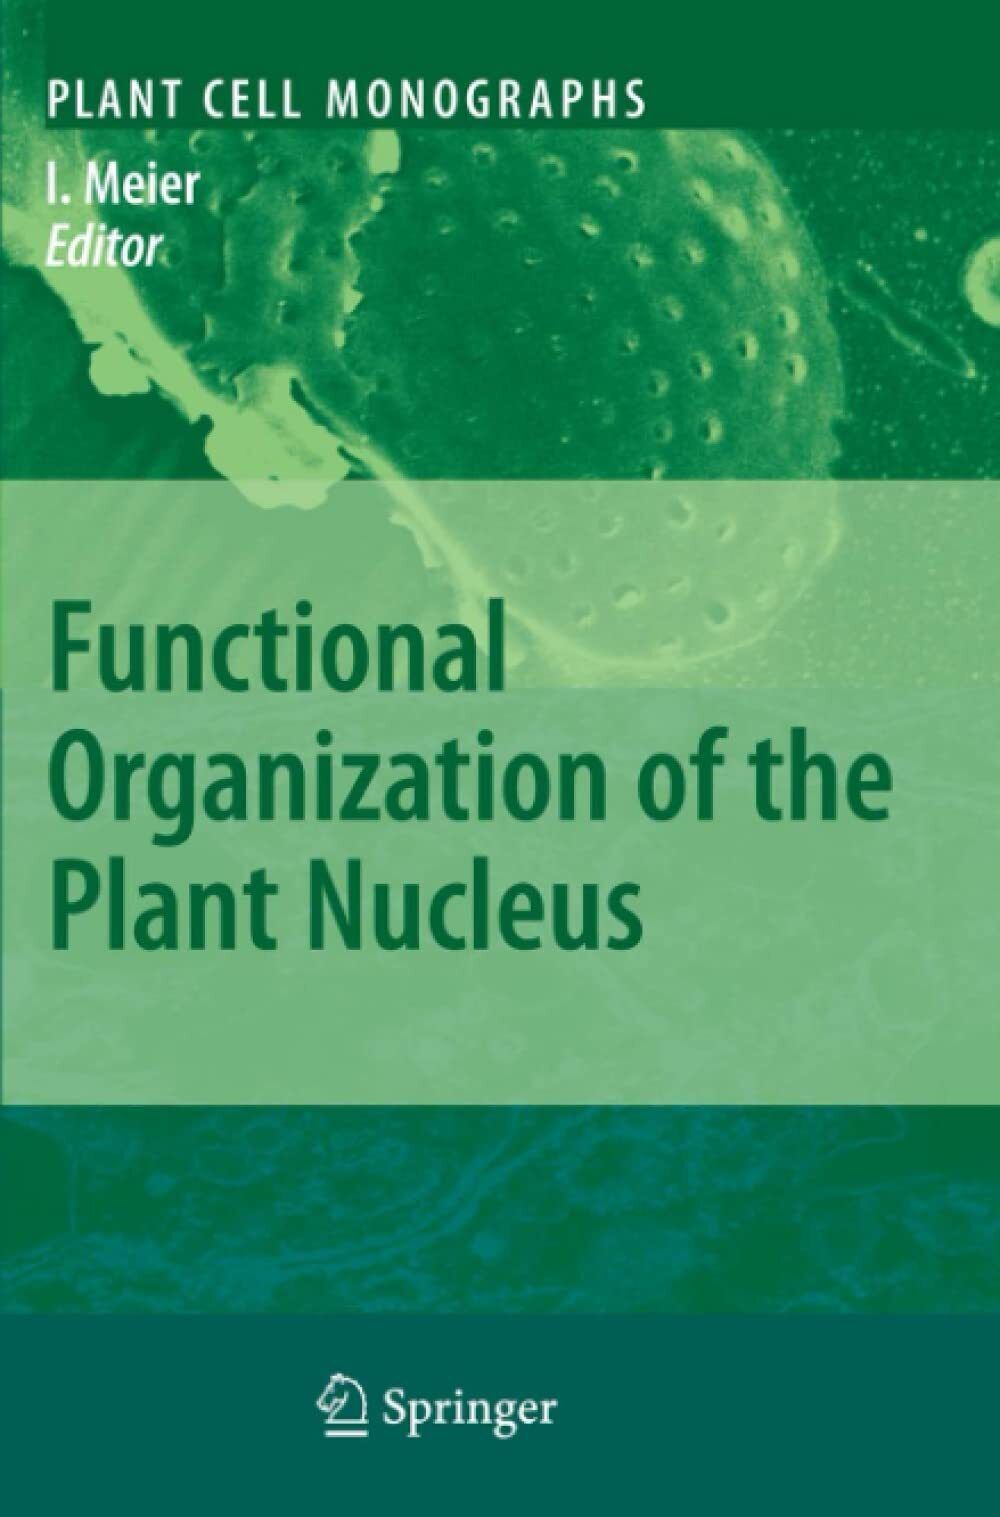 Functional Organization of the Plant Nucleus - Iris Meier - Springer, 2010